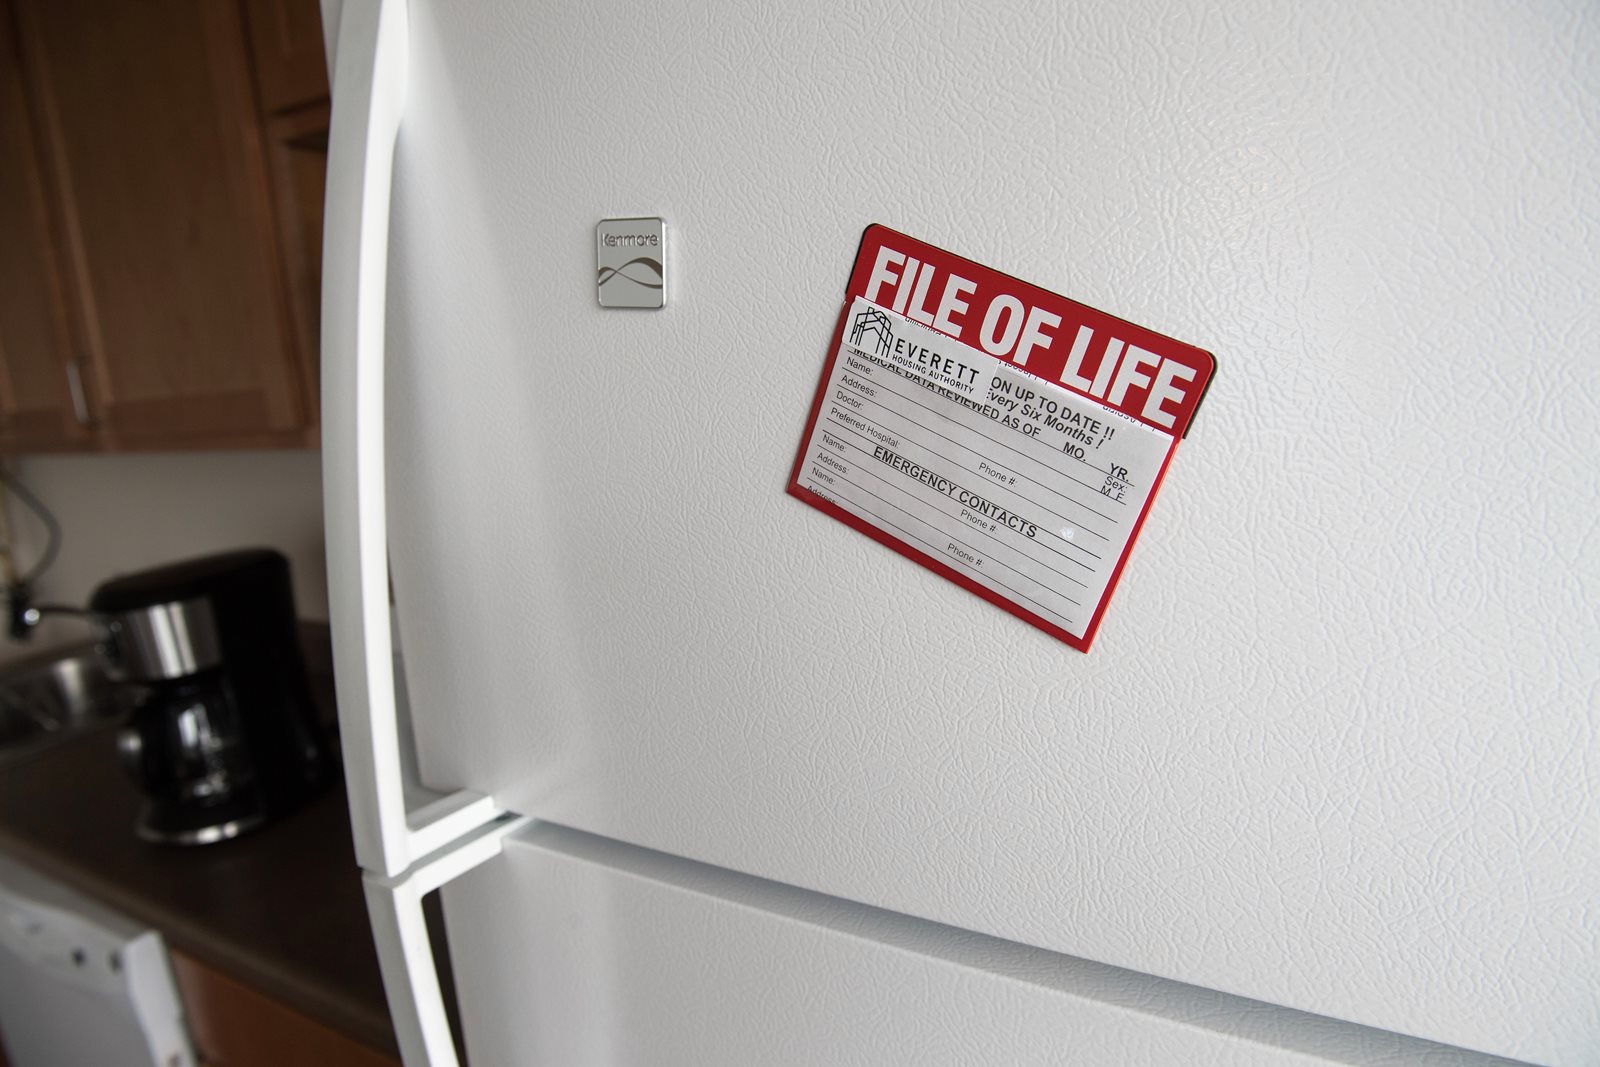 File of Life on refrigerator door